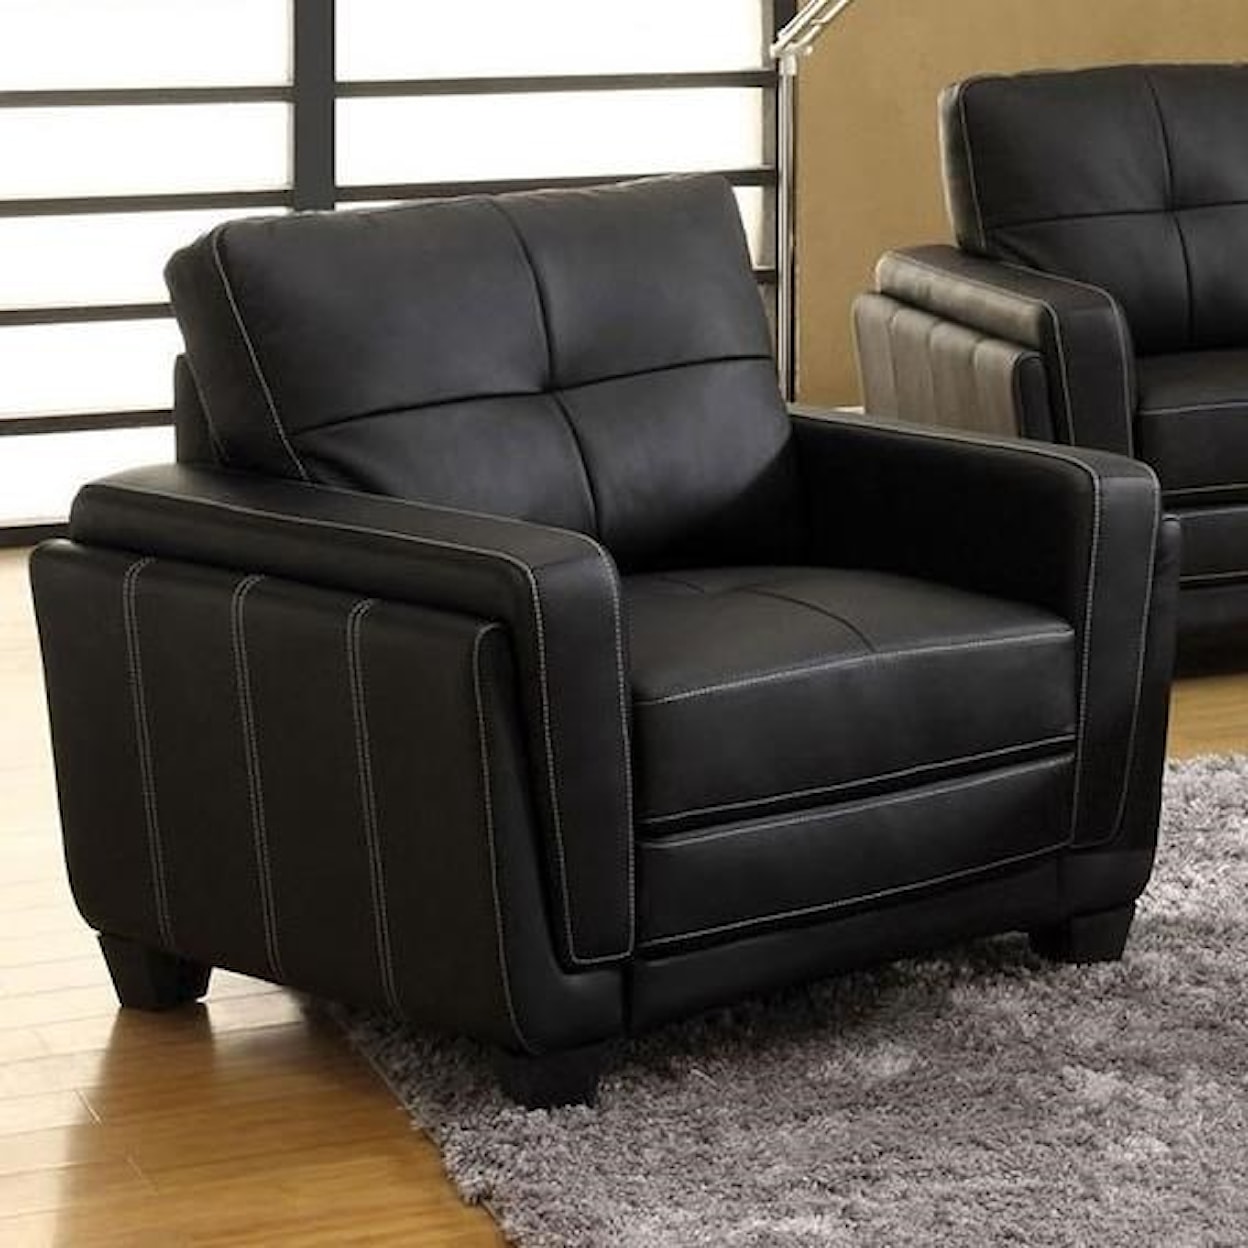 Furniture of America Blacksburg Chair